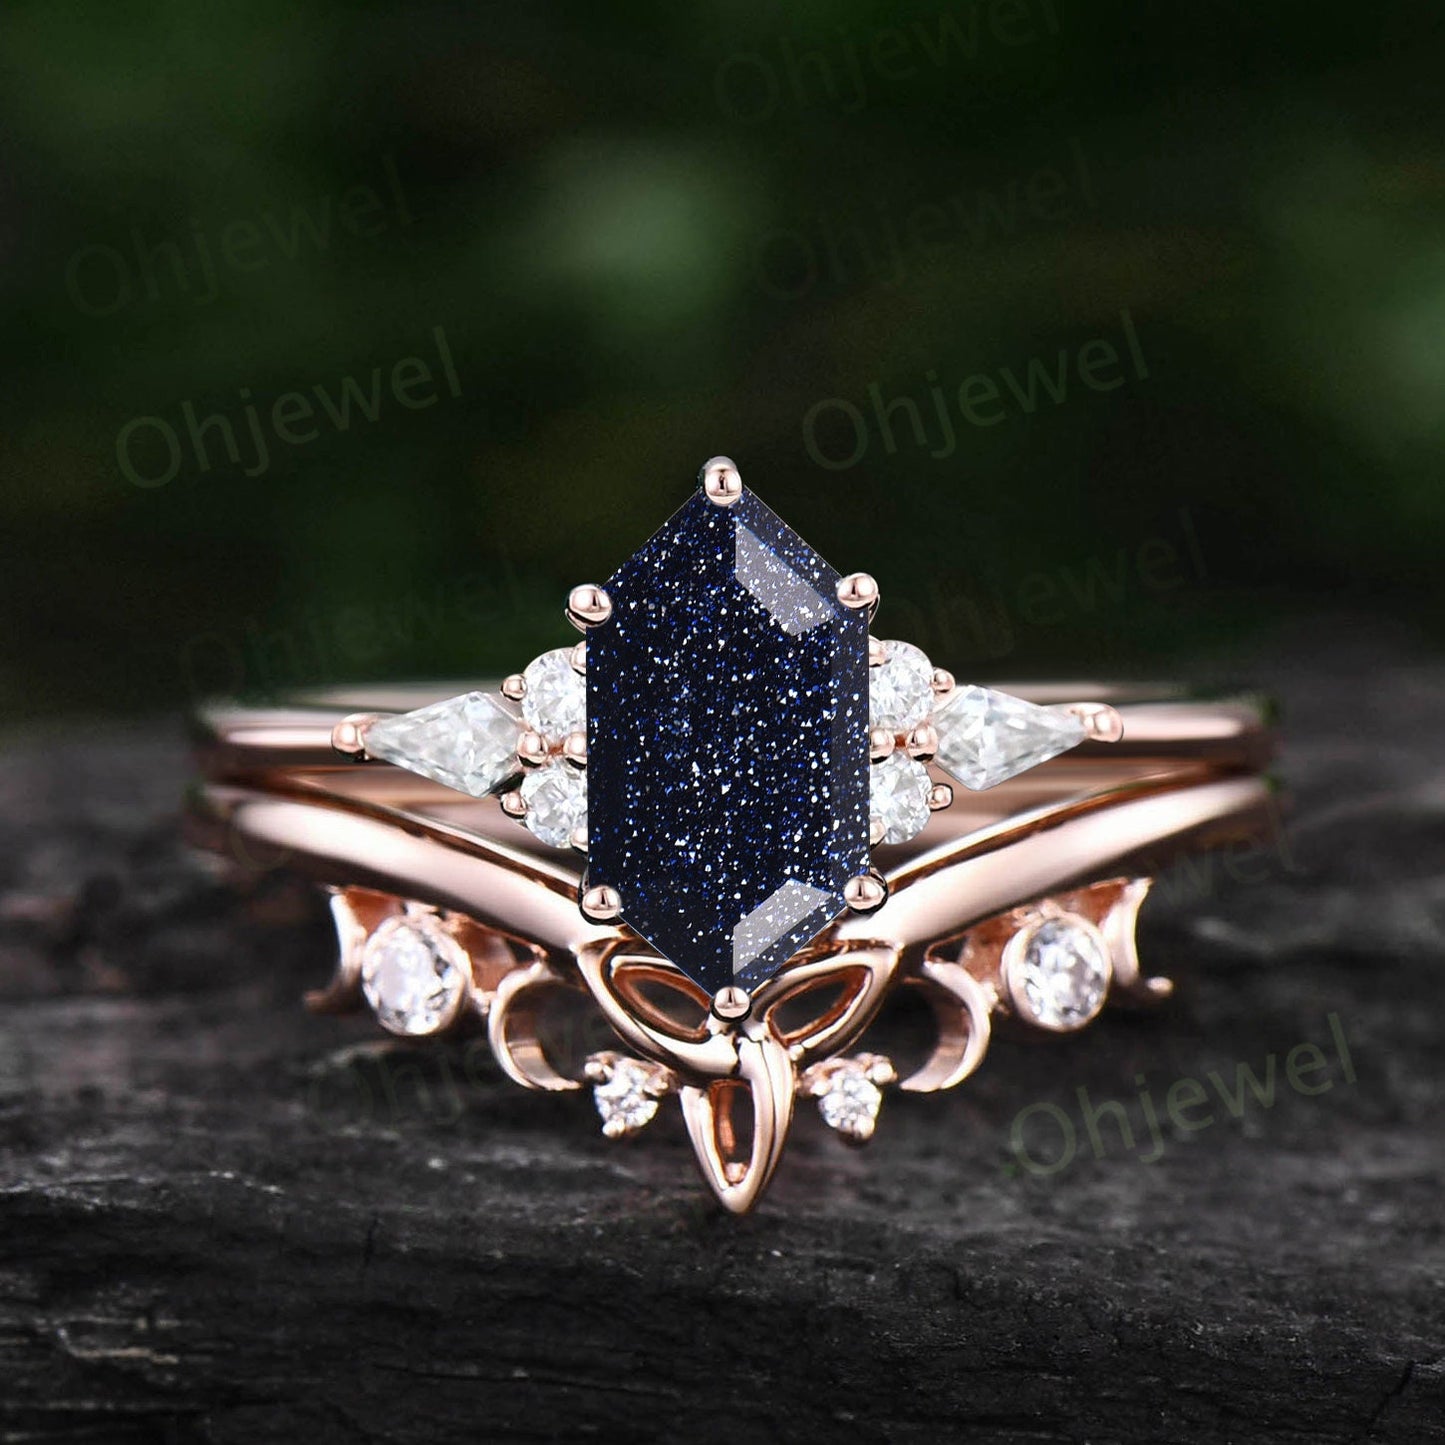 Hexagon cut blue goldstone ring vintage blue sandstone engagement ring set solid 14k gold kite moissanite anniversary ring set women gift